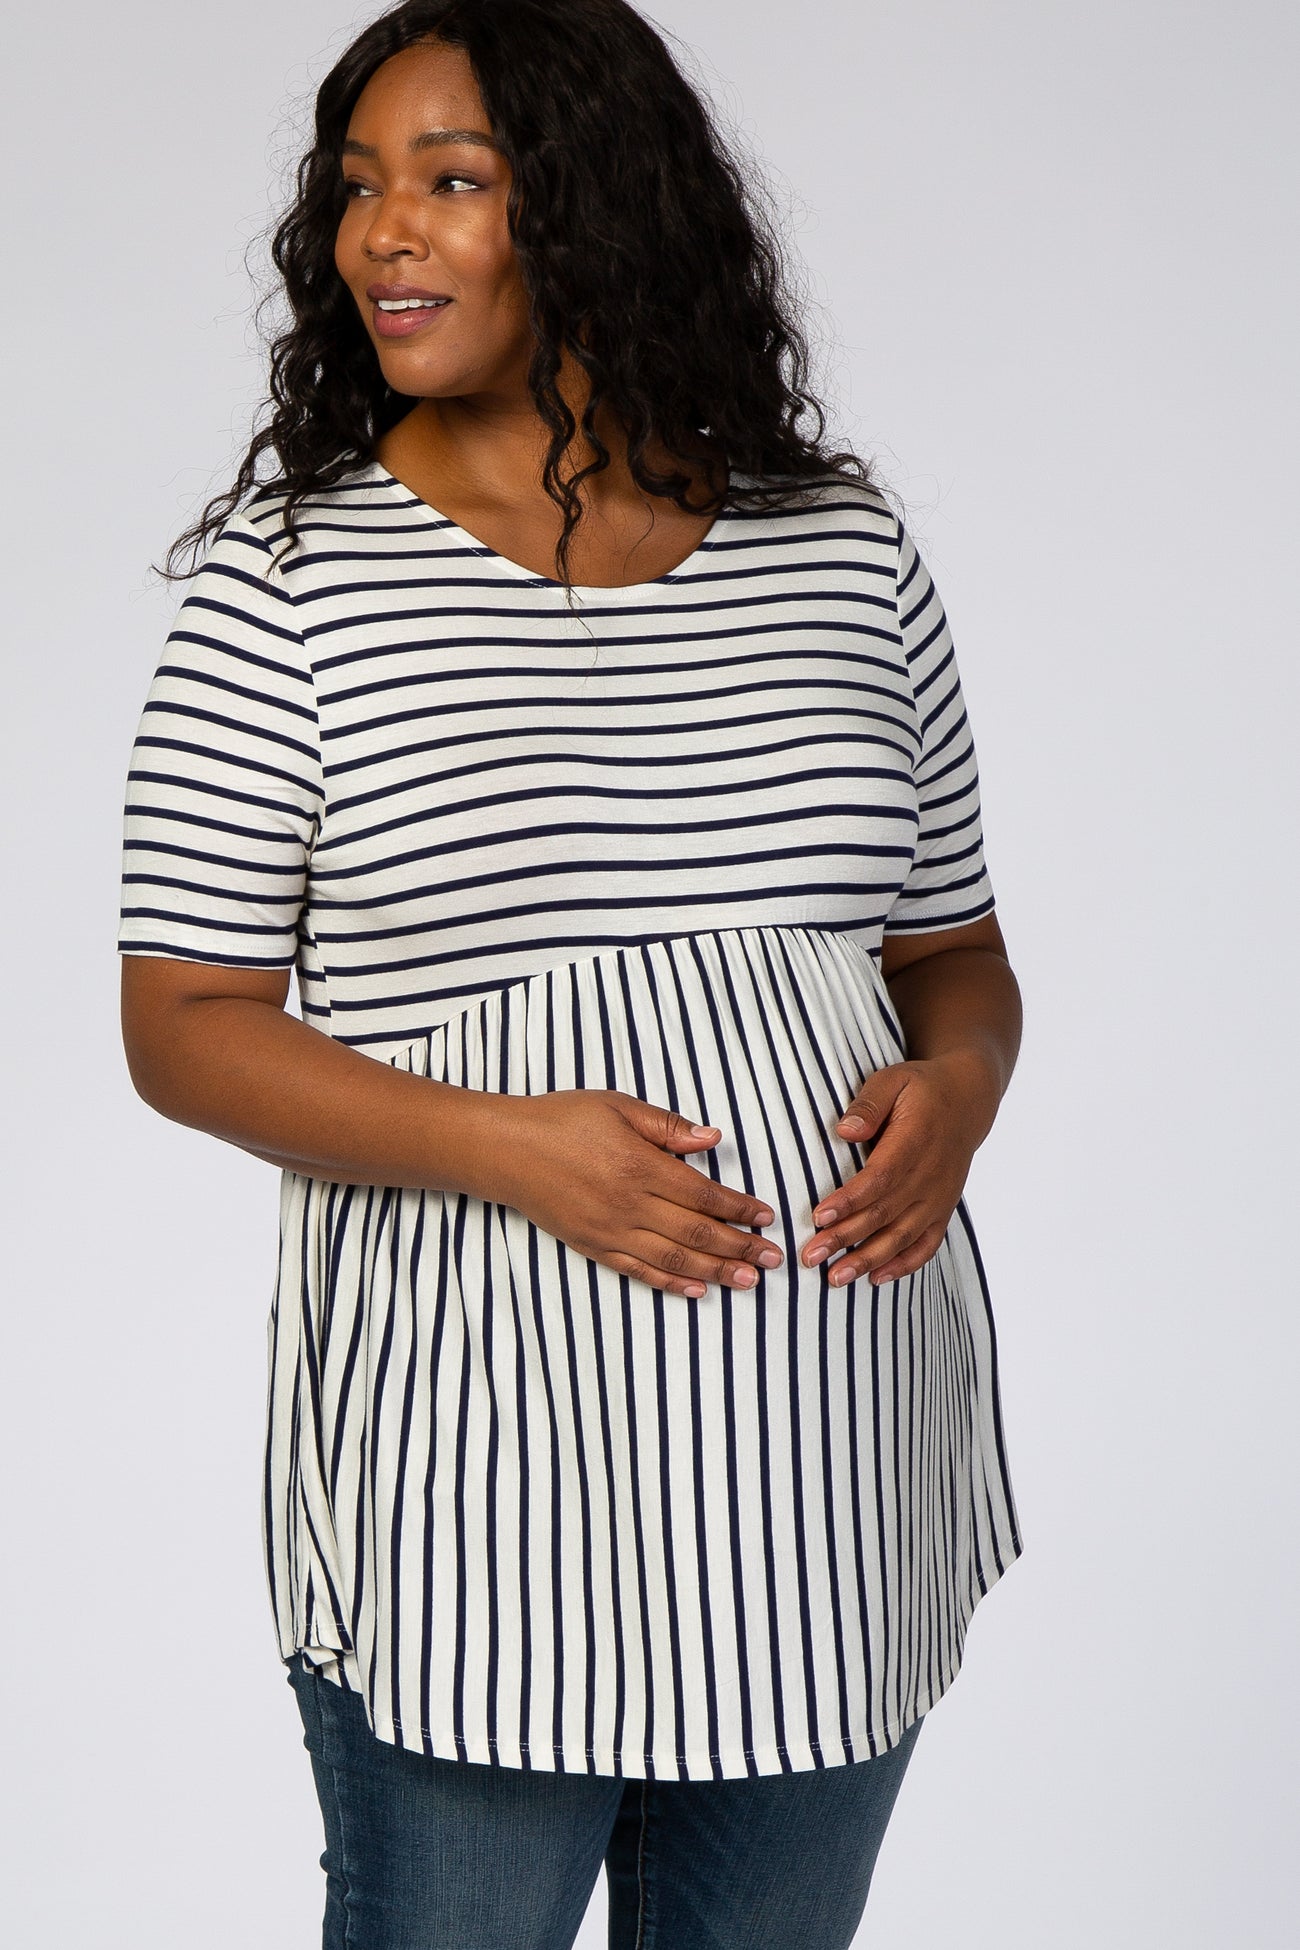 WAJCSHFS Maternity Clothes Plus Size Women's Maternity Peplum Blouse Top  with Empire Waist Pleat (Pink,XL) 